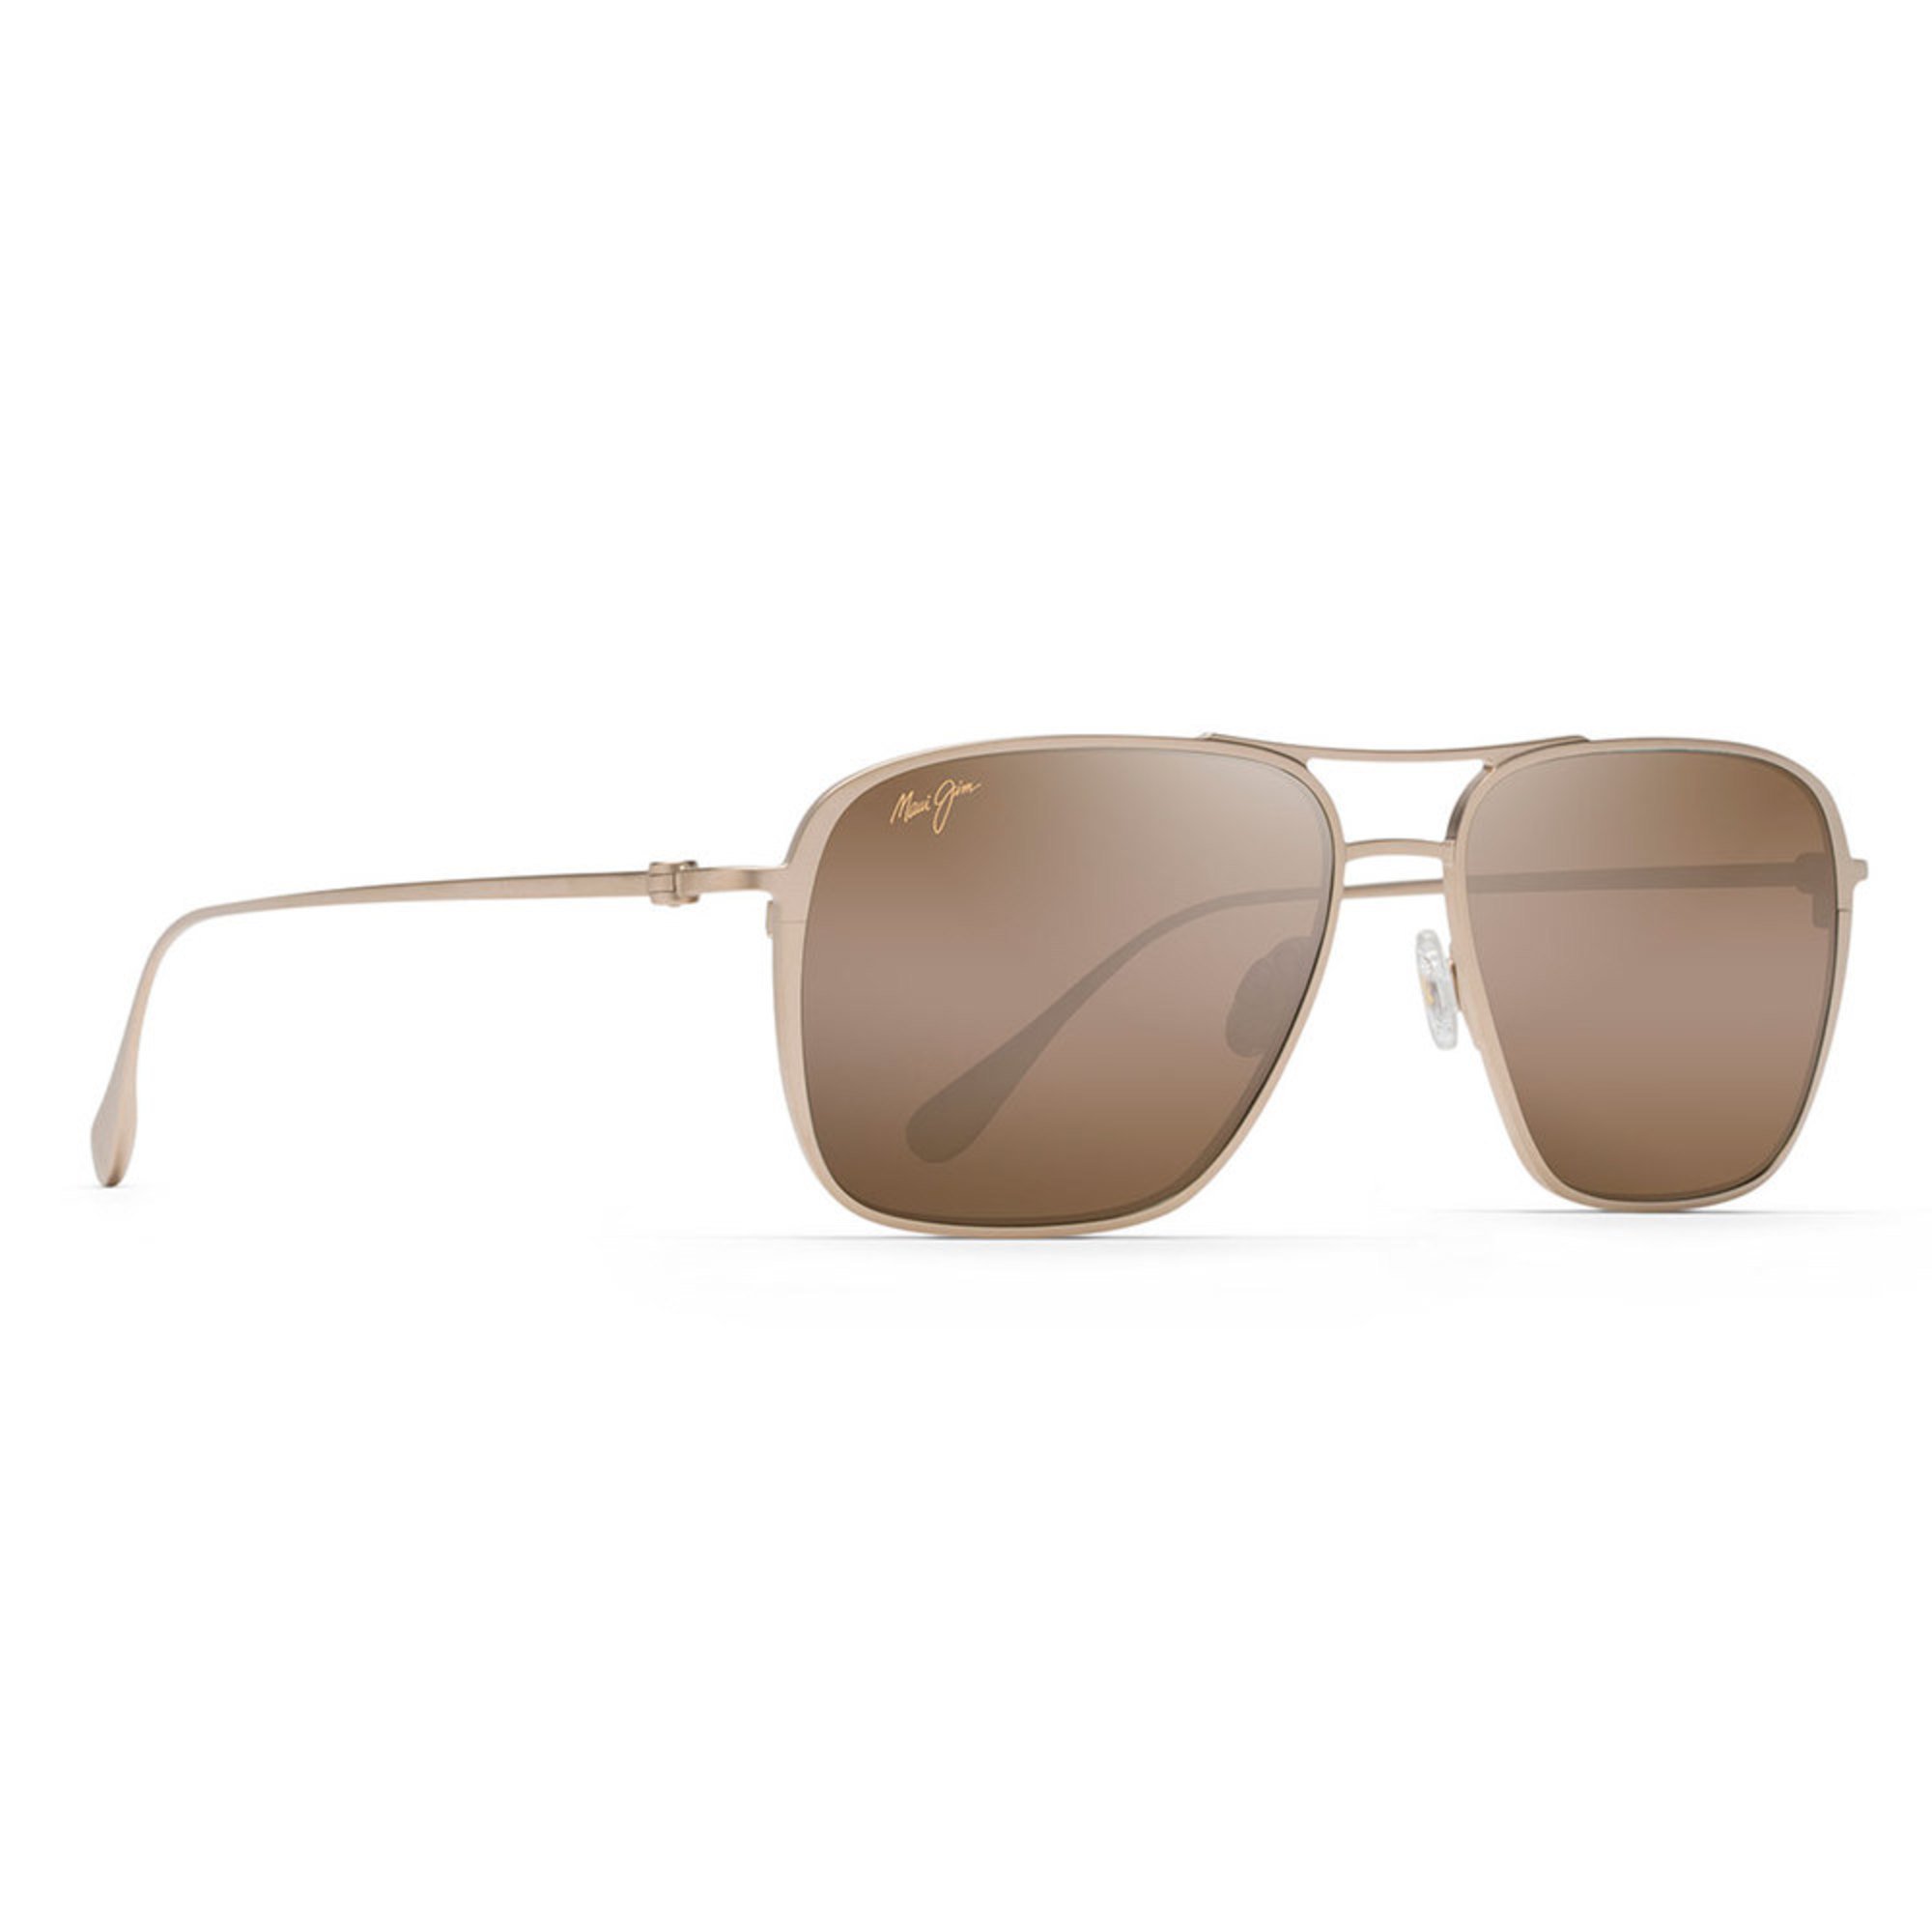 Maui Jim Unisex Beaches Gold Sunglasses 57mm | Women's Sunglasses ...